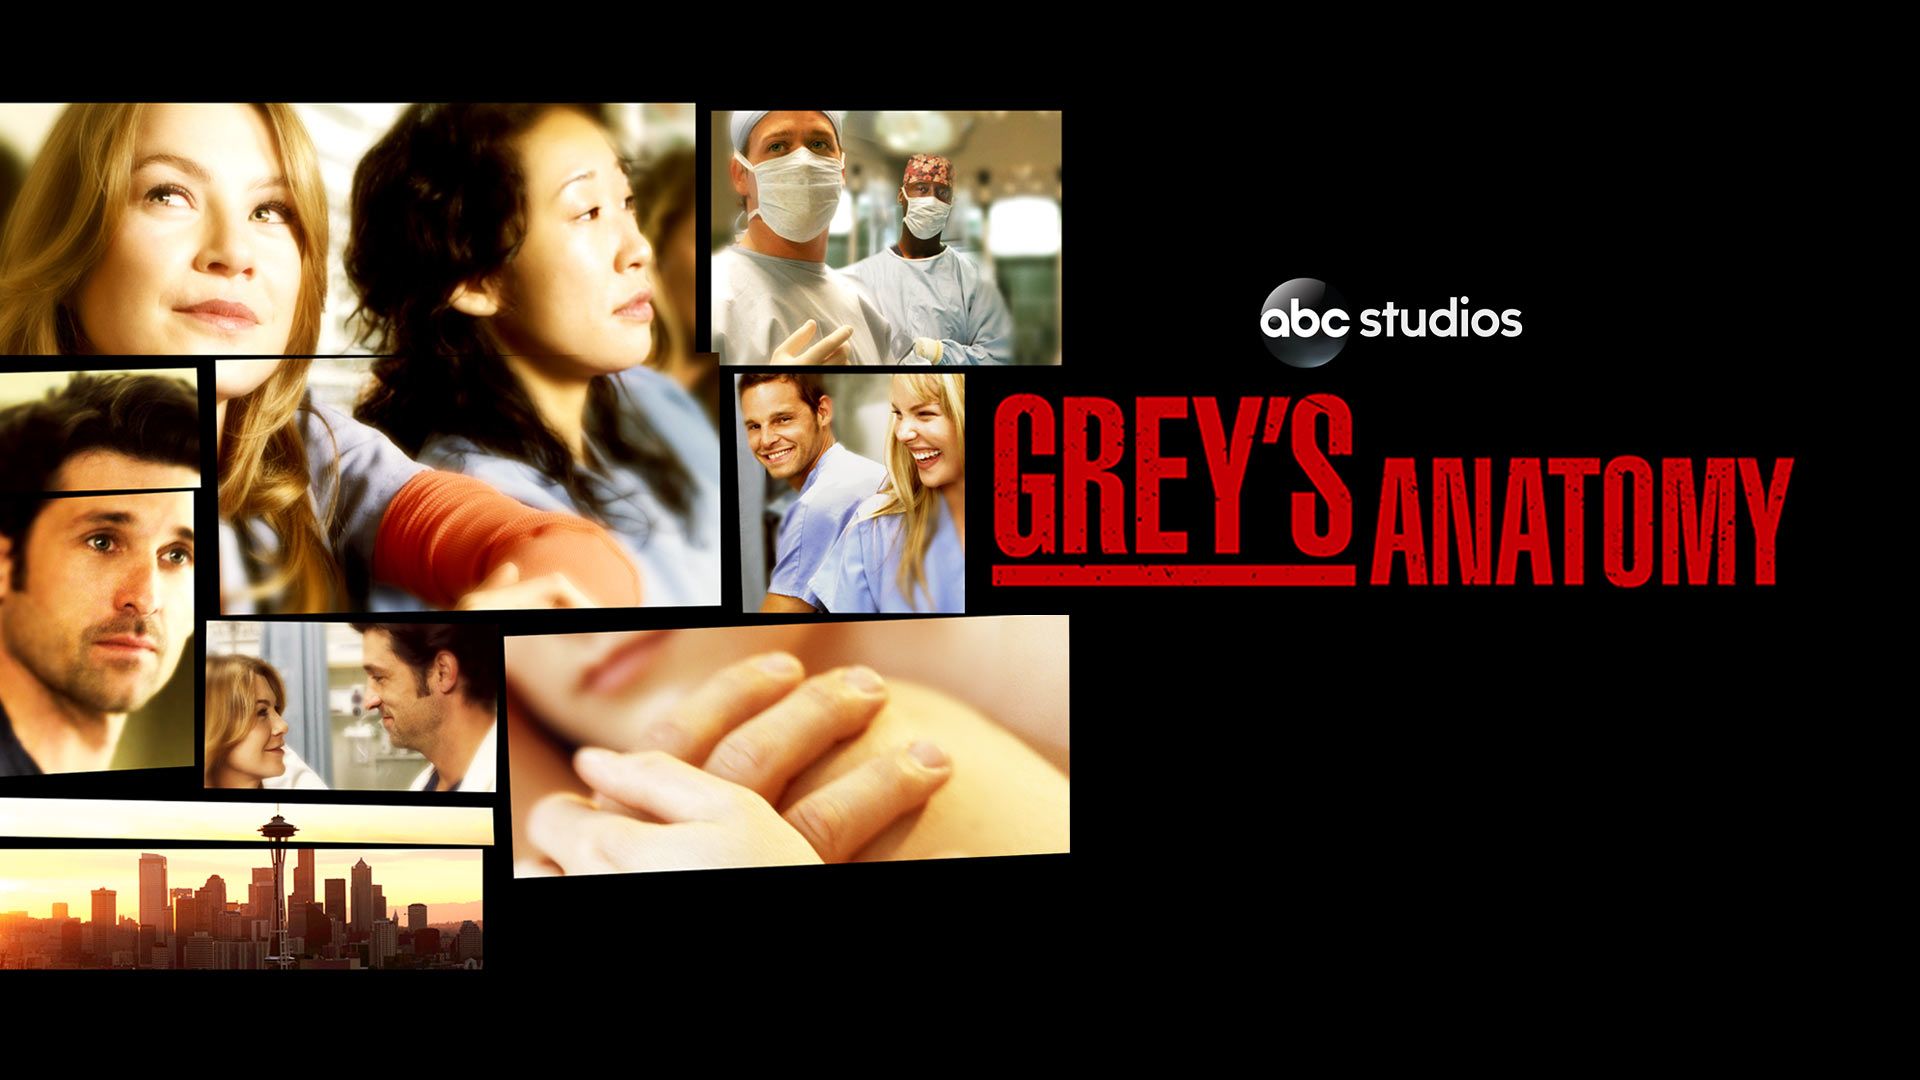 Greys anatomy season 15 episode guide - Grey's Anatomy